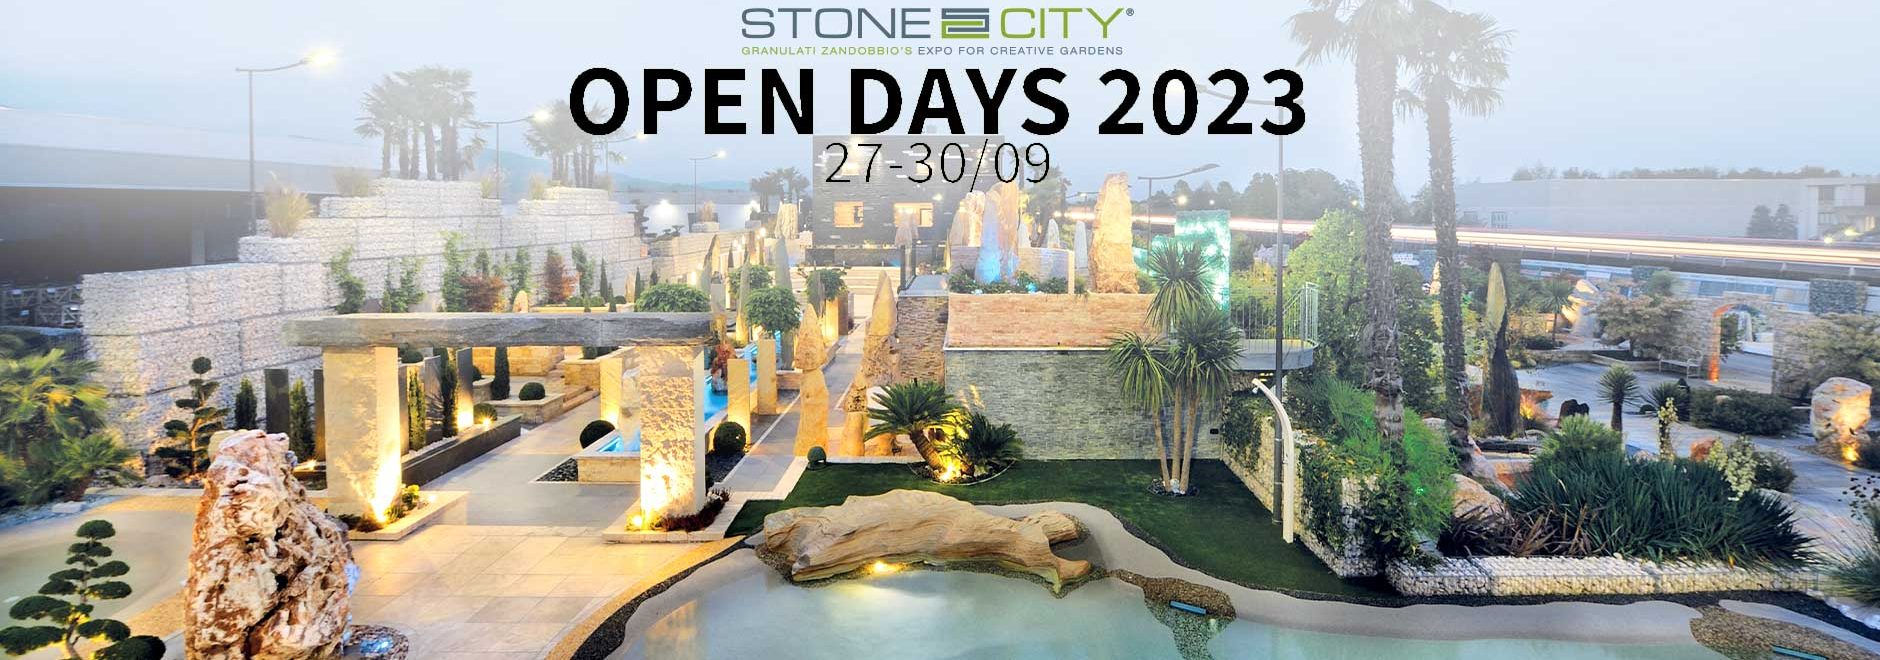 stone-city-open-days